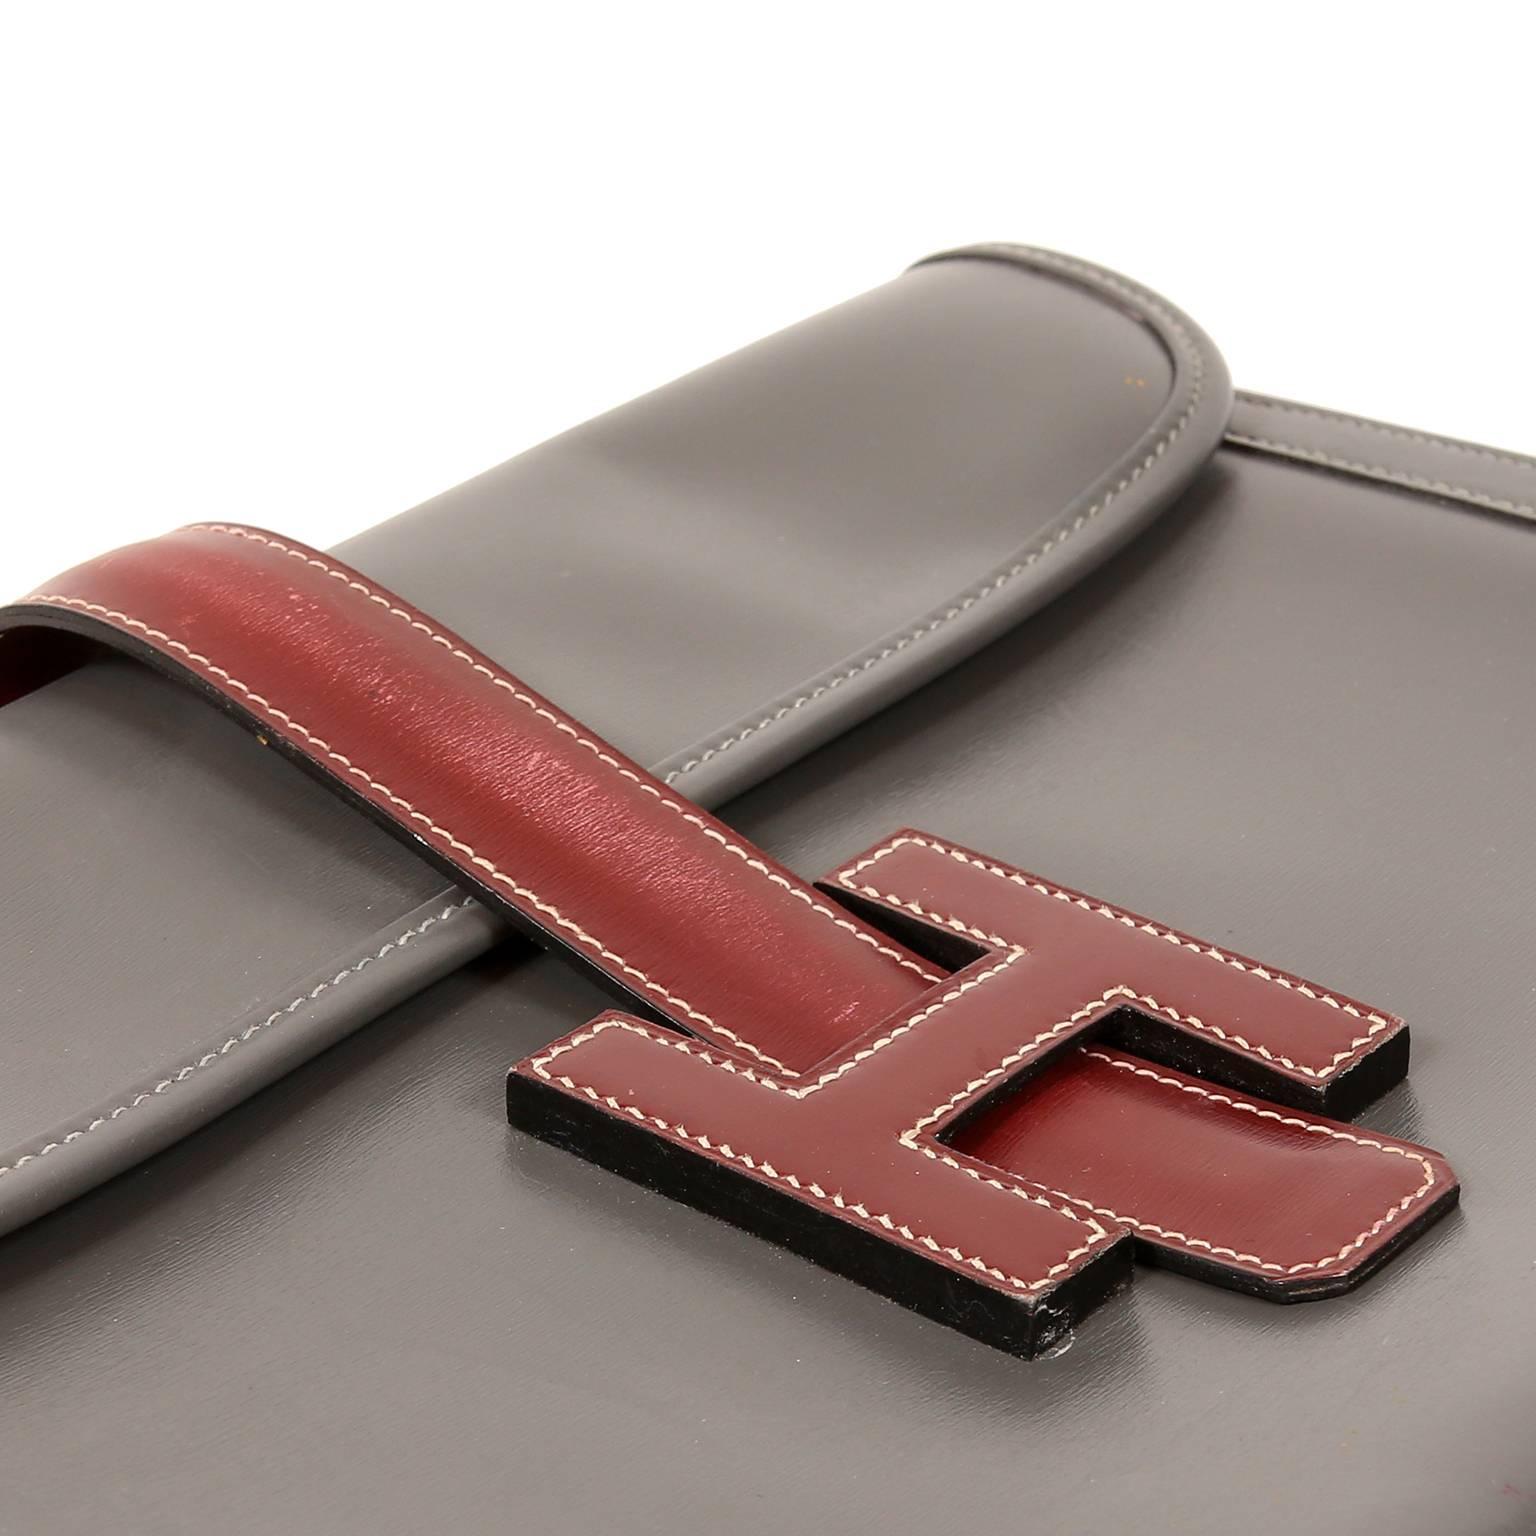  Hermès Grey and Bordeaux Leather Jige Clutch 3